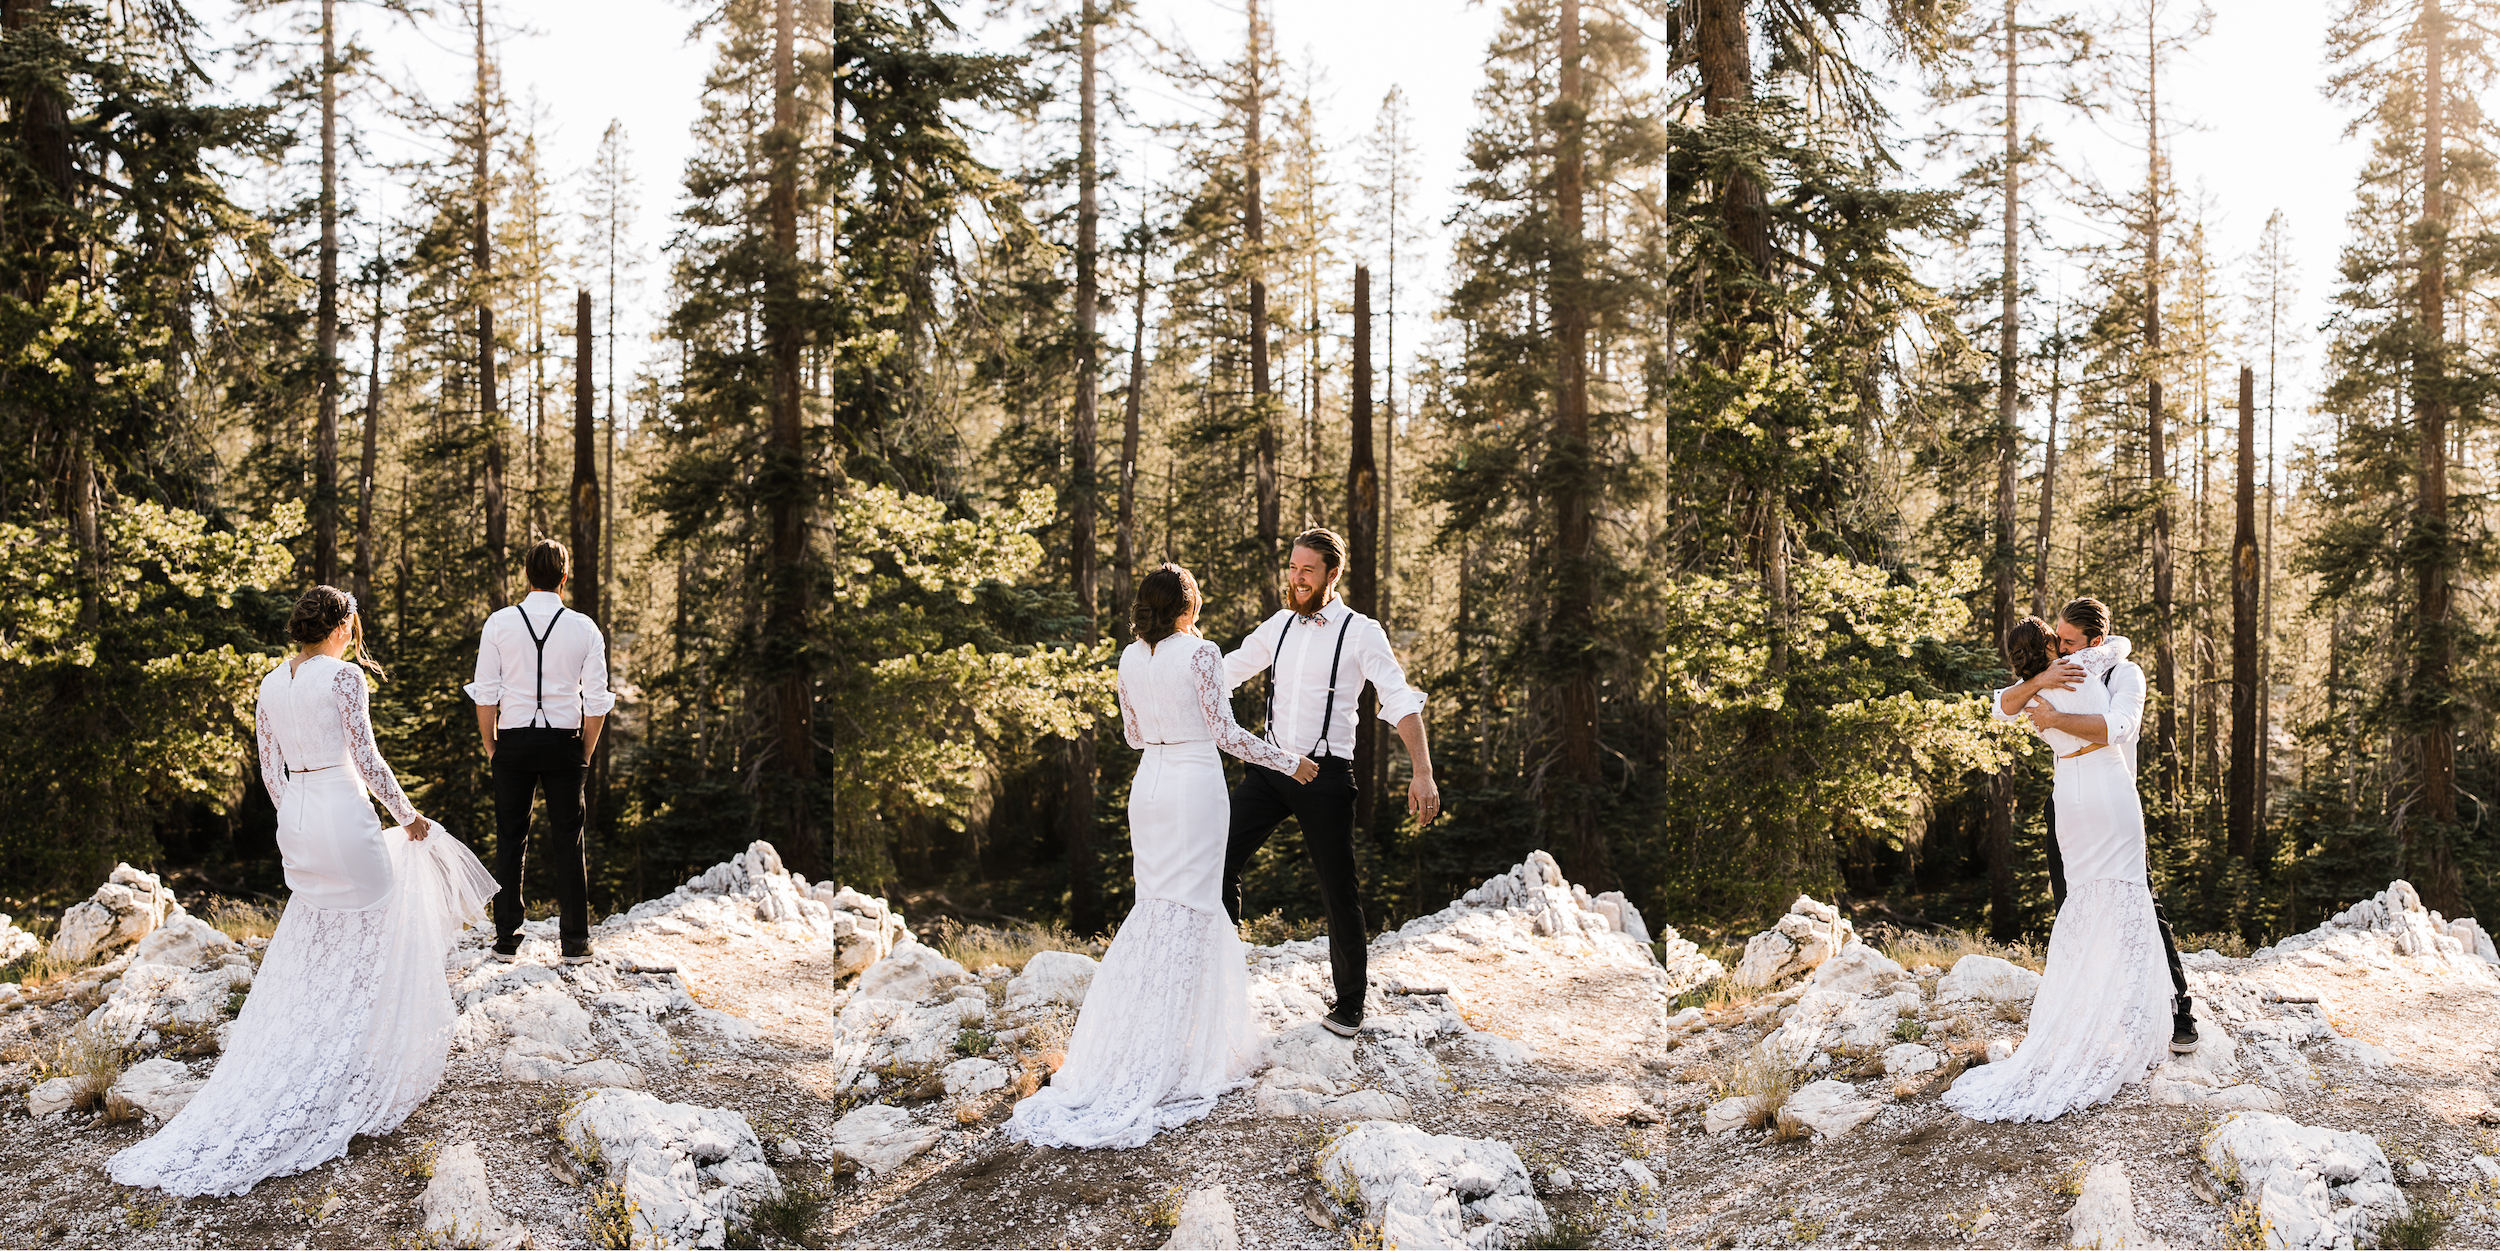 destination elopement in yosemite valley | adventure wedding portraits + romantic vows on a cliffside | national park elopement photographer | the hearnes adventure photography